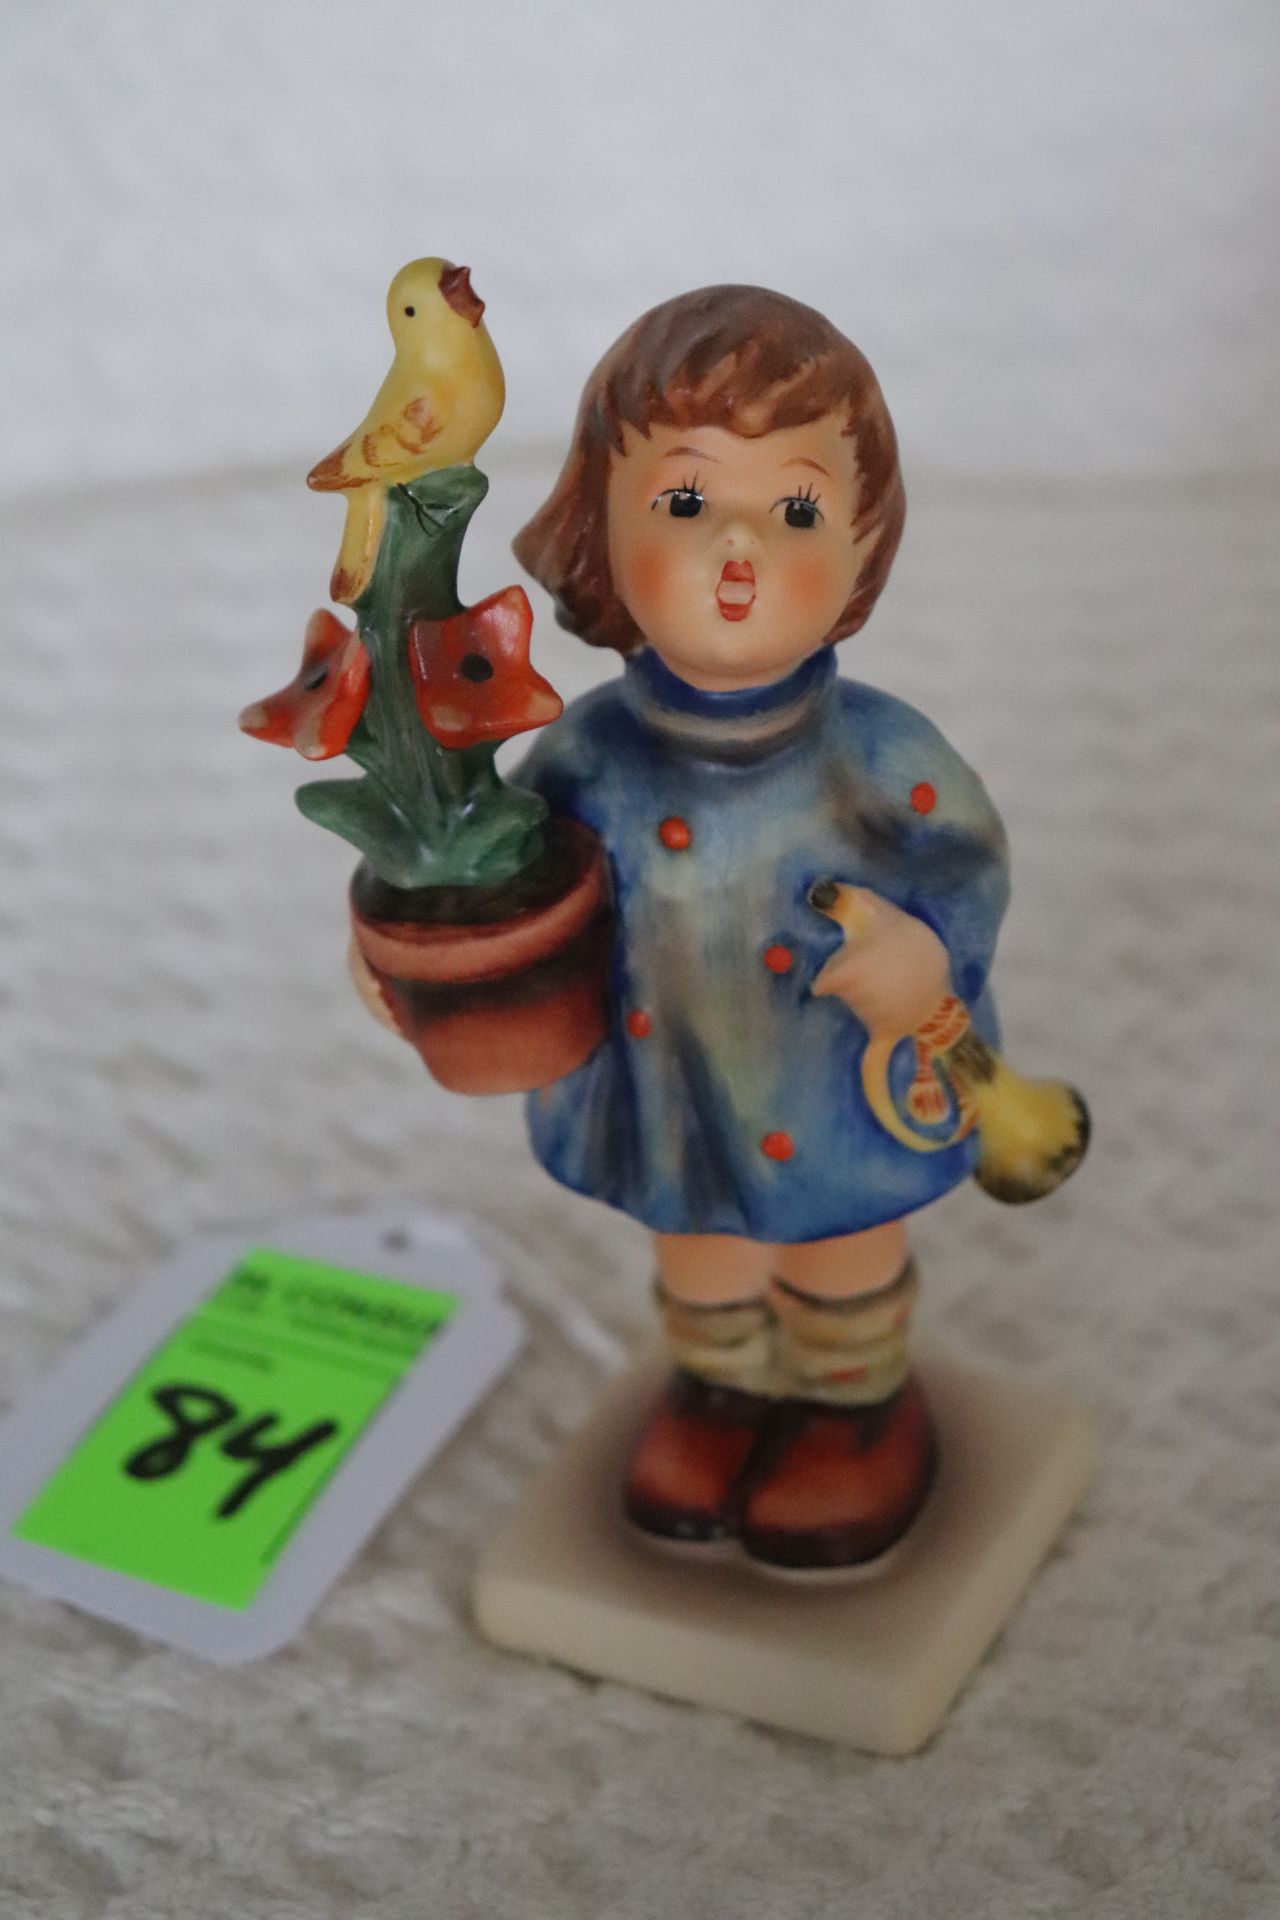 Hummel figurine, "Girl with Flower Pot", 17/0, 1971, height 5"